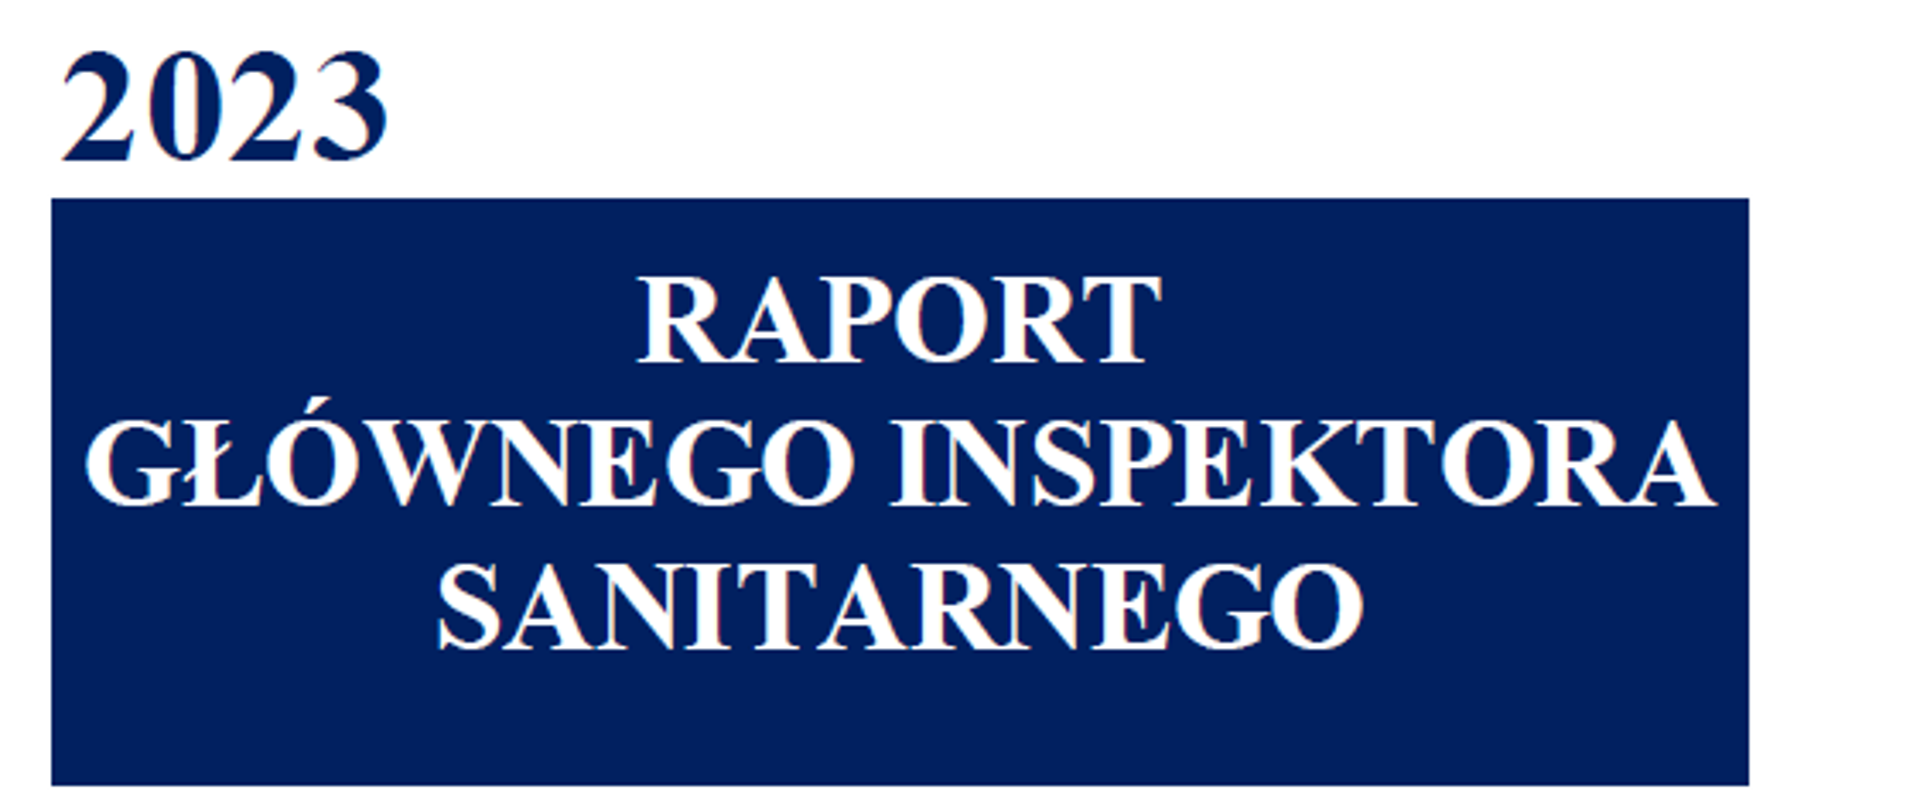 raport_gł_inspektora_sanitarnego